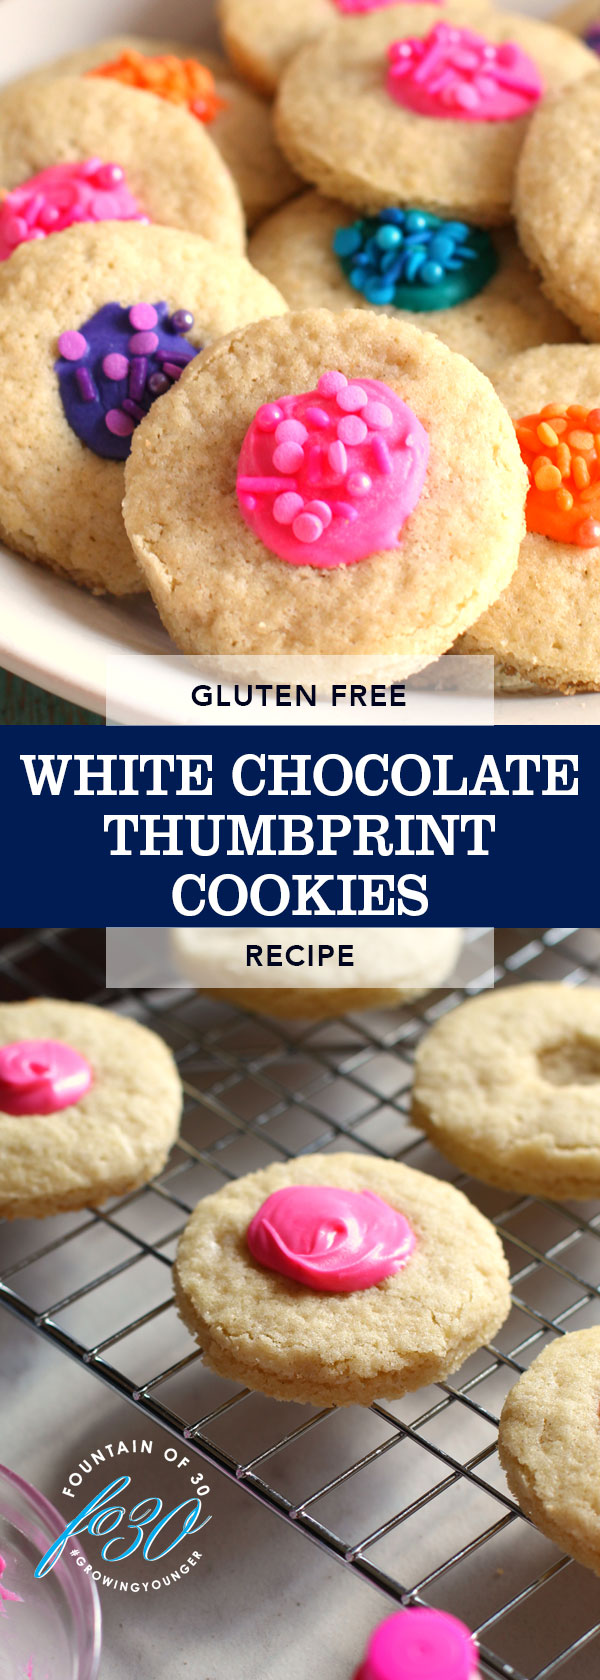 white chocolate thumbprint cookies fountainof30